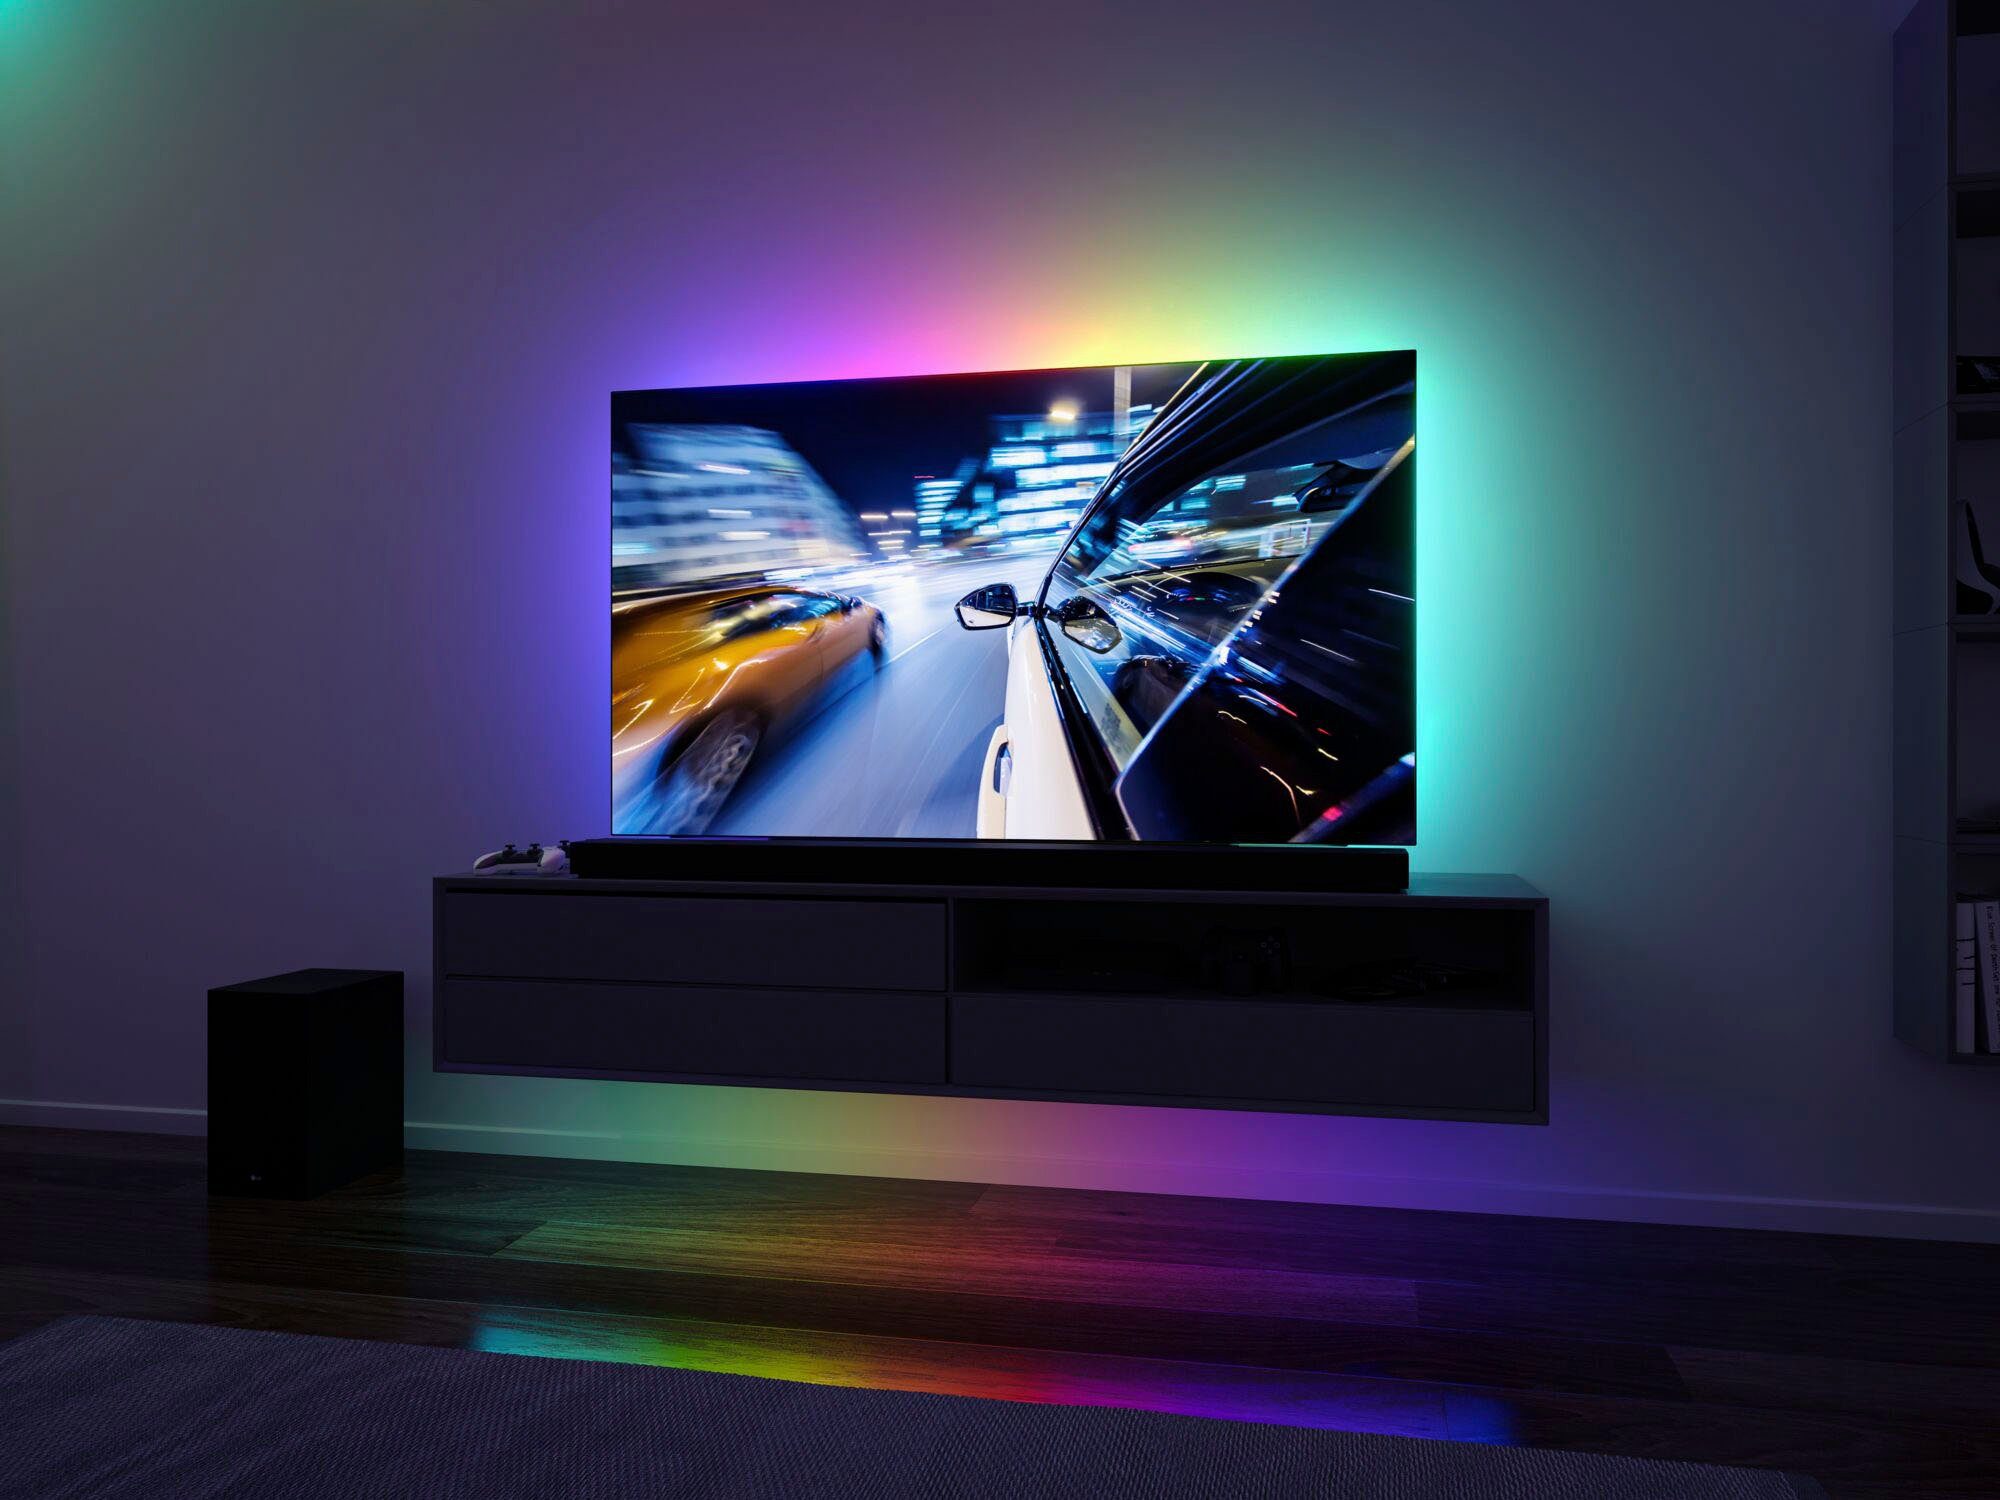 USB 3,5W, LED-Streifen Dynamic 55 Zoll Rainbow 1-flammig RGB LED TV-Beleuchtung Paulmann Strip 2m